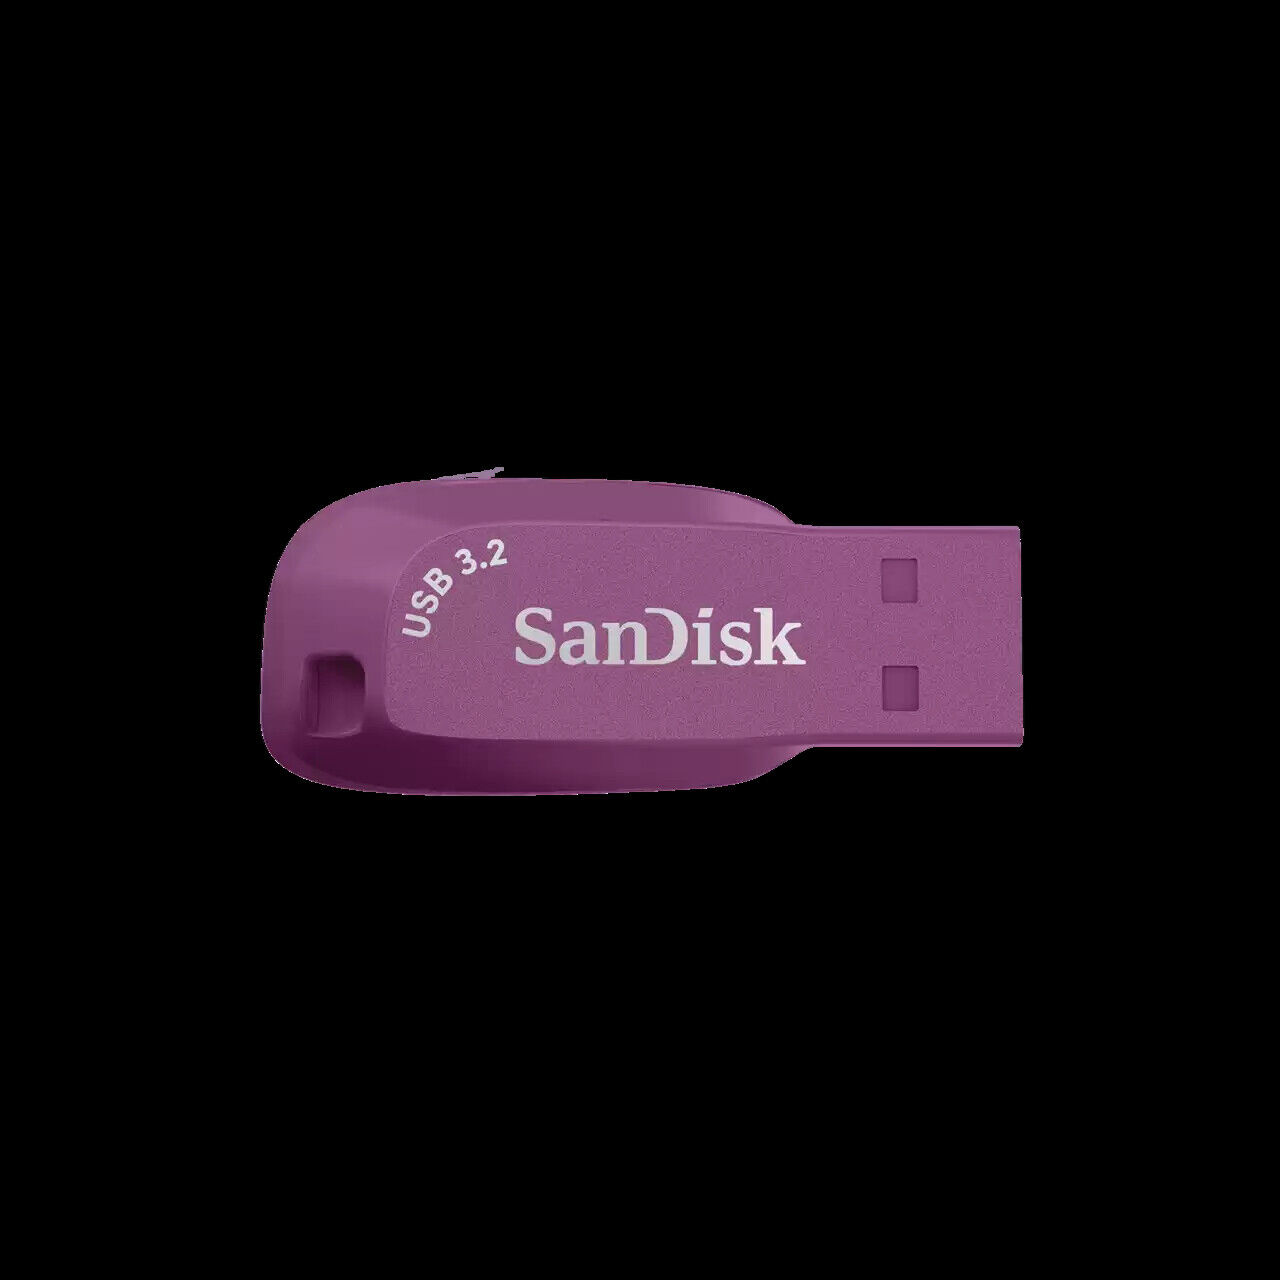 SanDisk 32GB Ultra Shift USB 3.2 Gen 1 Flash Drive, Cattelya Orchid - SDCZ410...